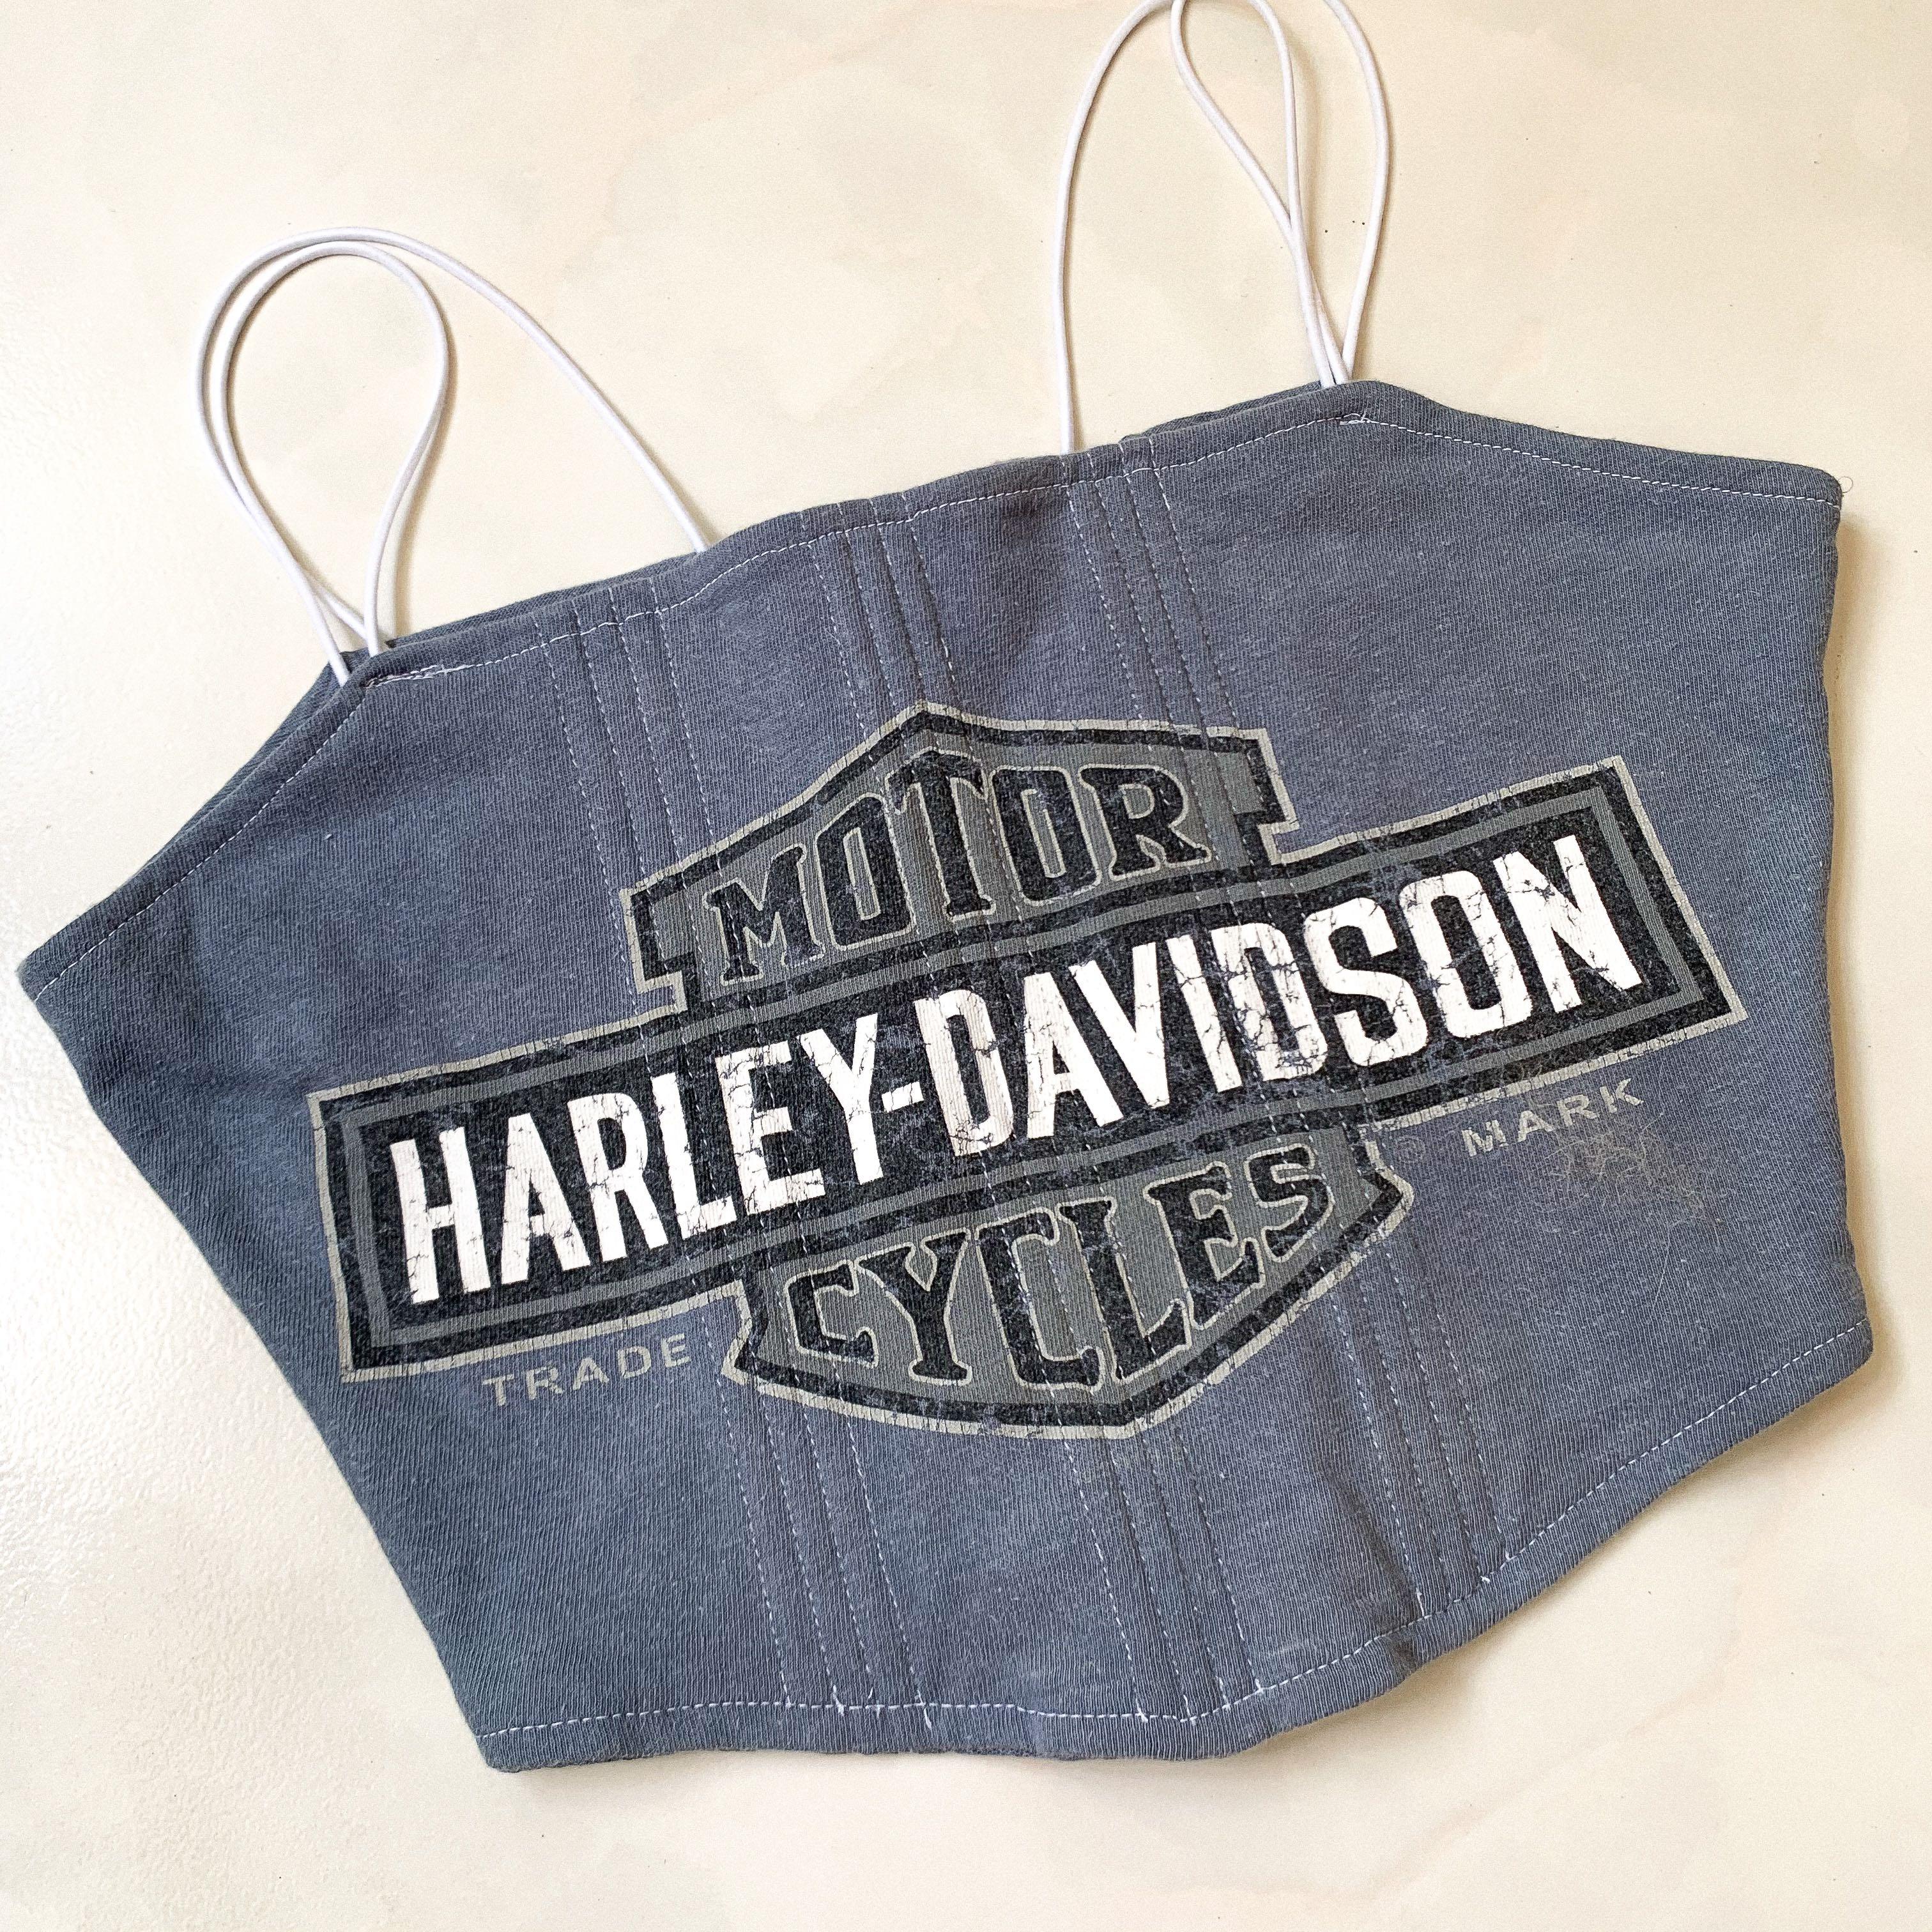 Harley Davidson Reworked Corset Top